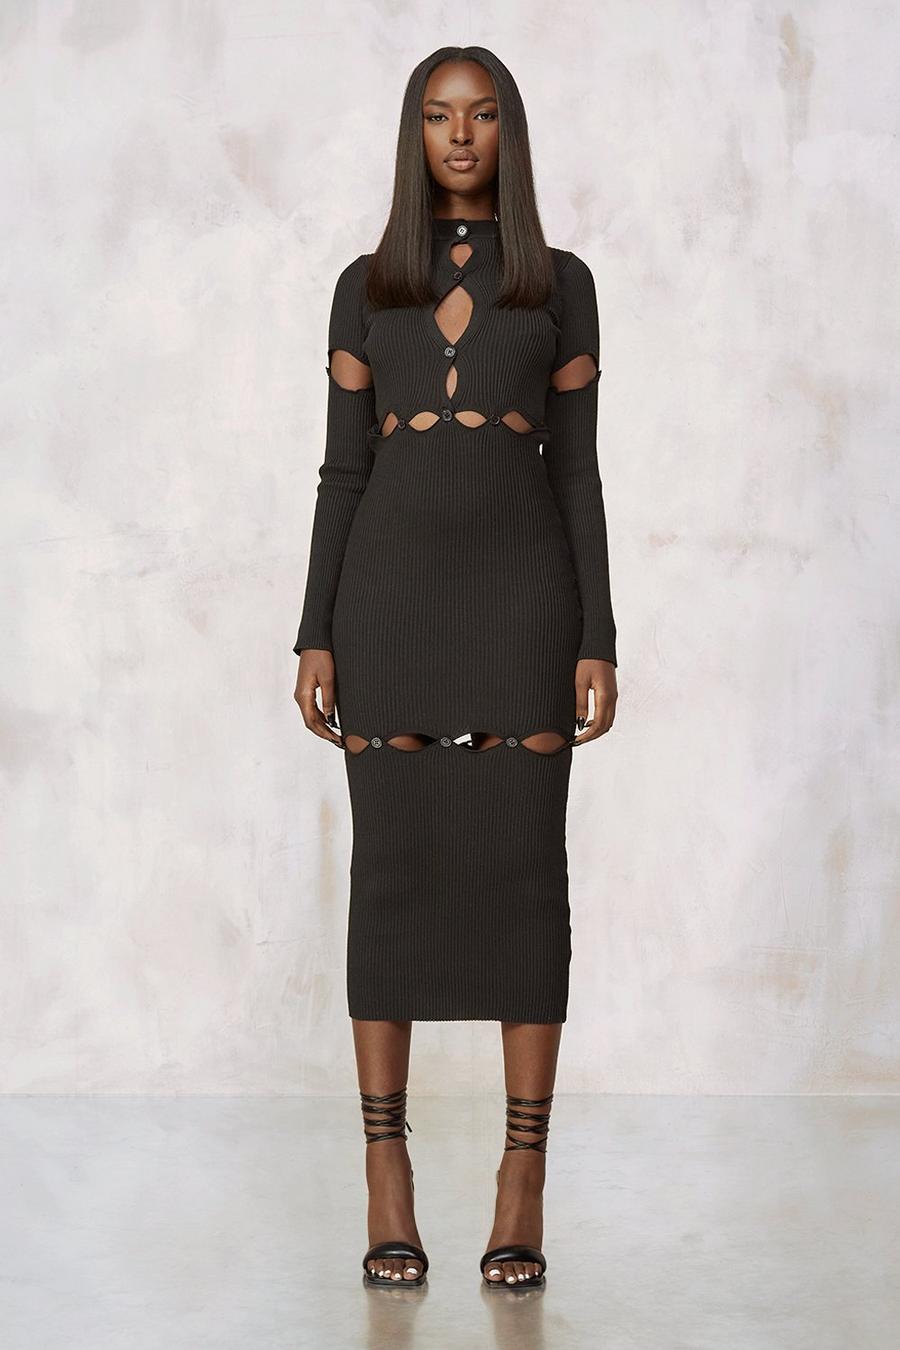 Black Kourtney Kardashian Barker Multiway Knitted Dress